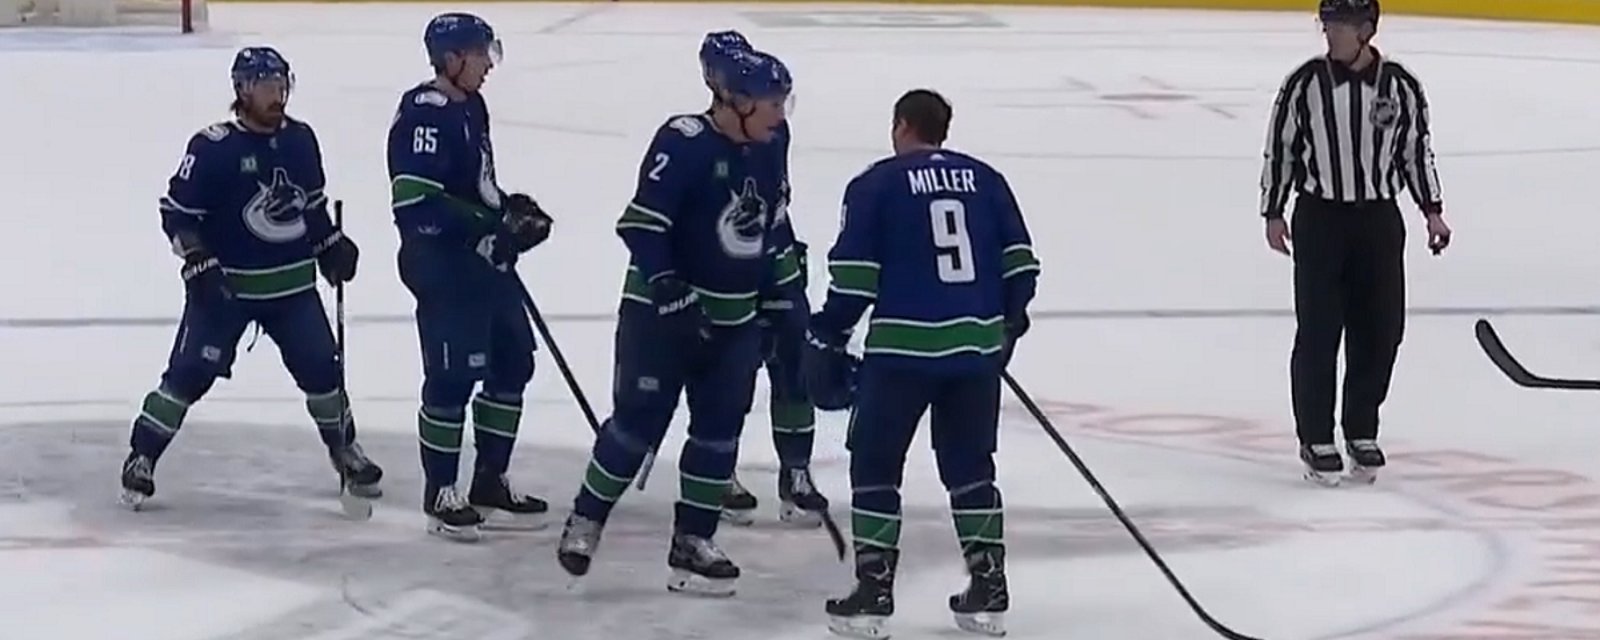 Teammates J.T. Miller and Luke Schenn get heated on the ice.